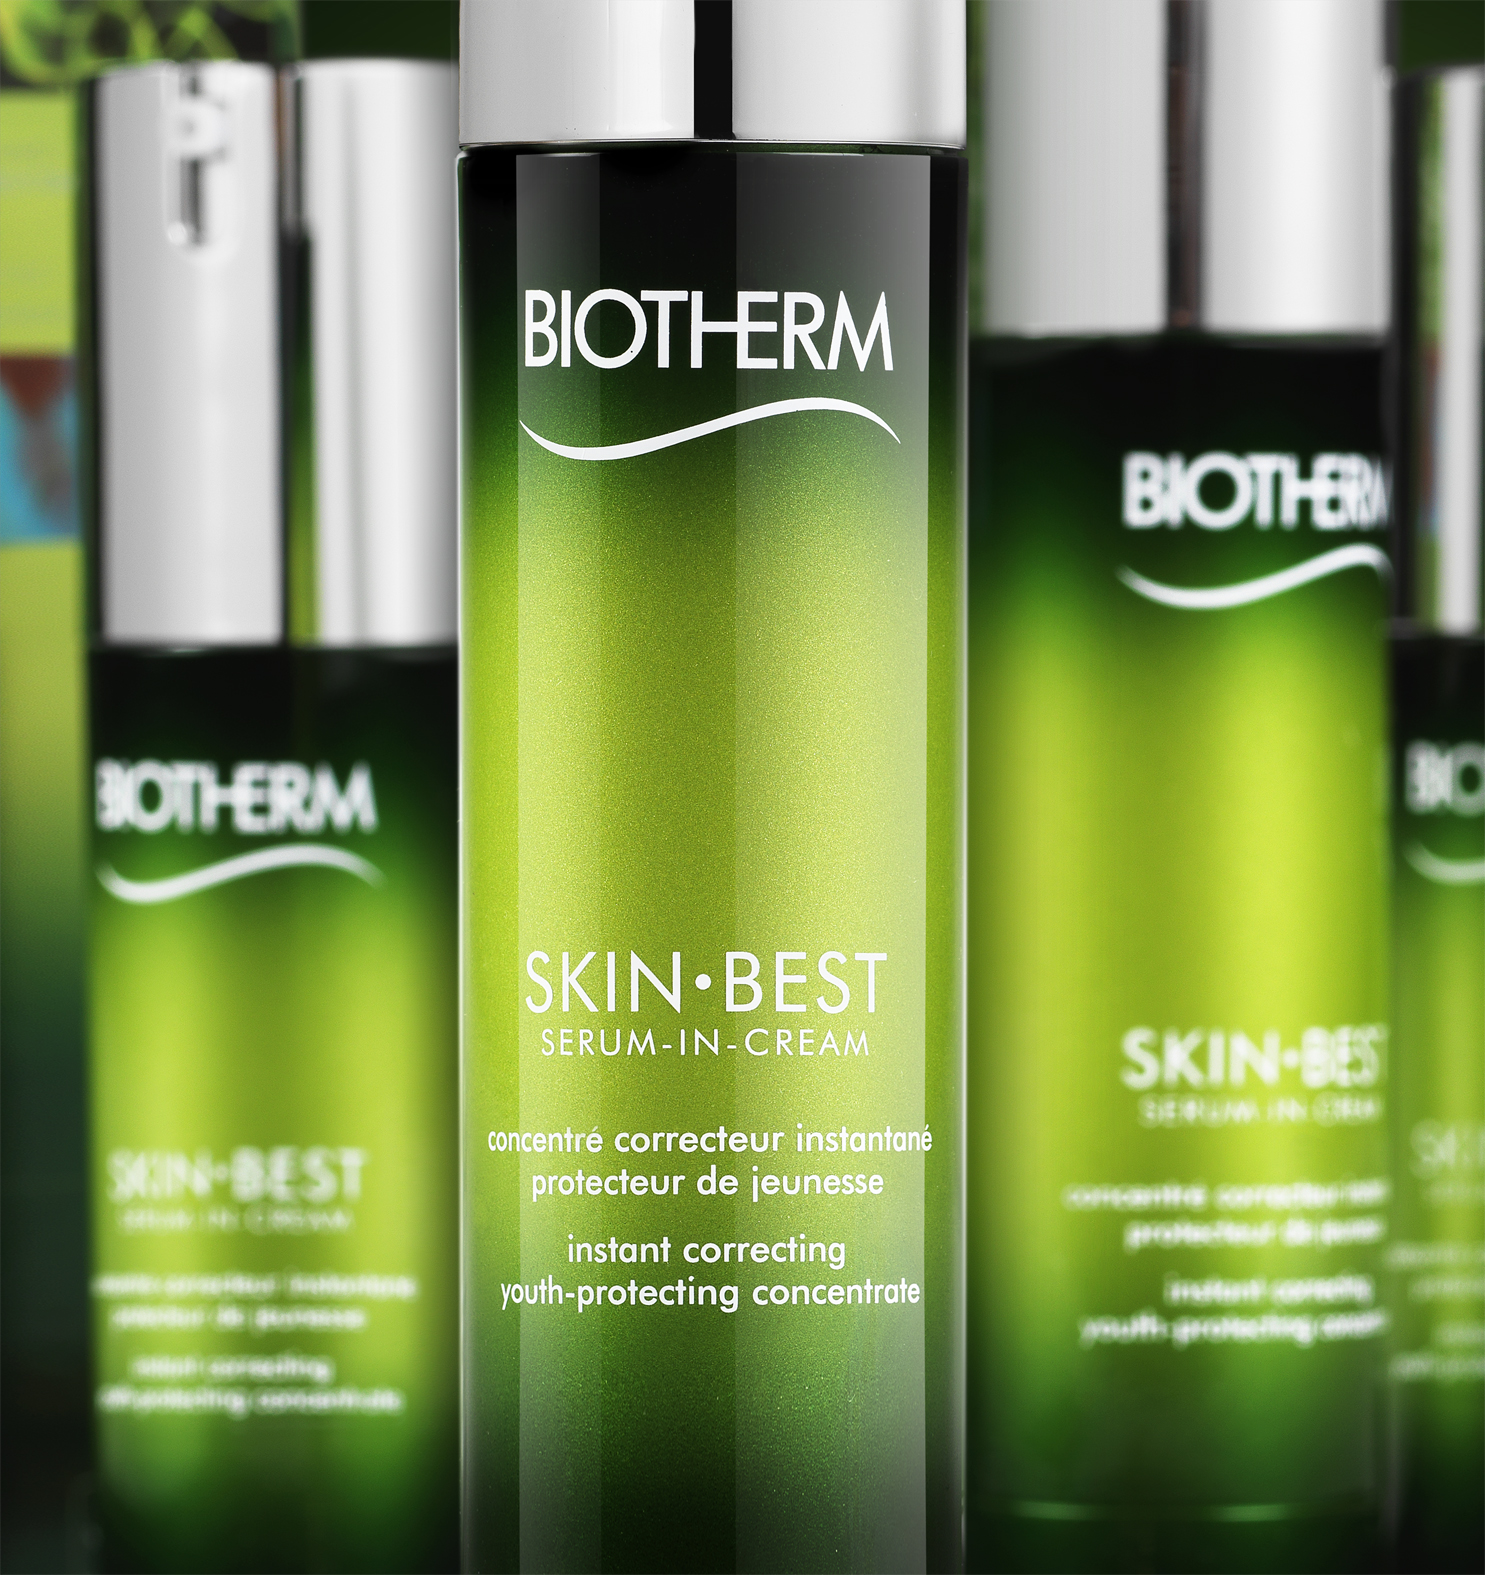 Biotherm_SkinBest_serum-in-cream